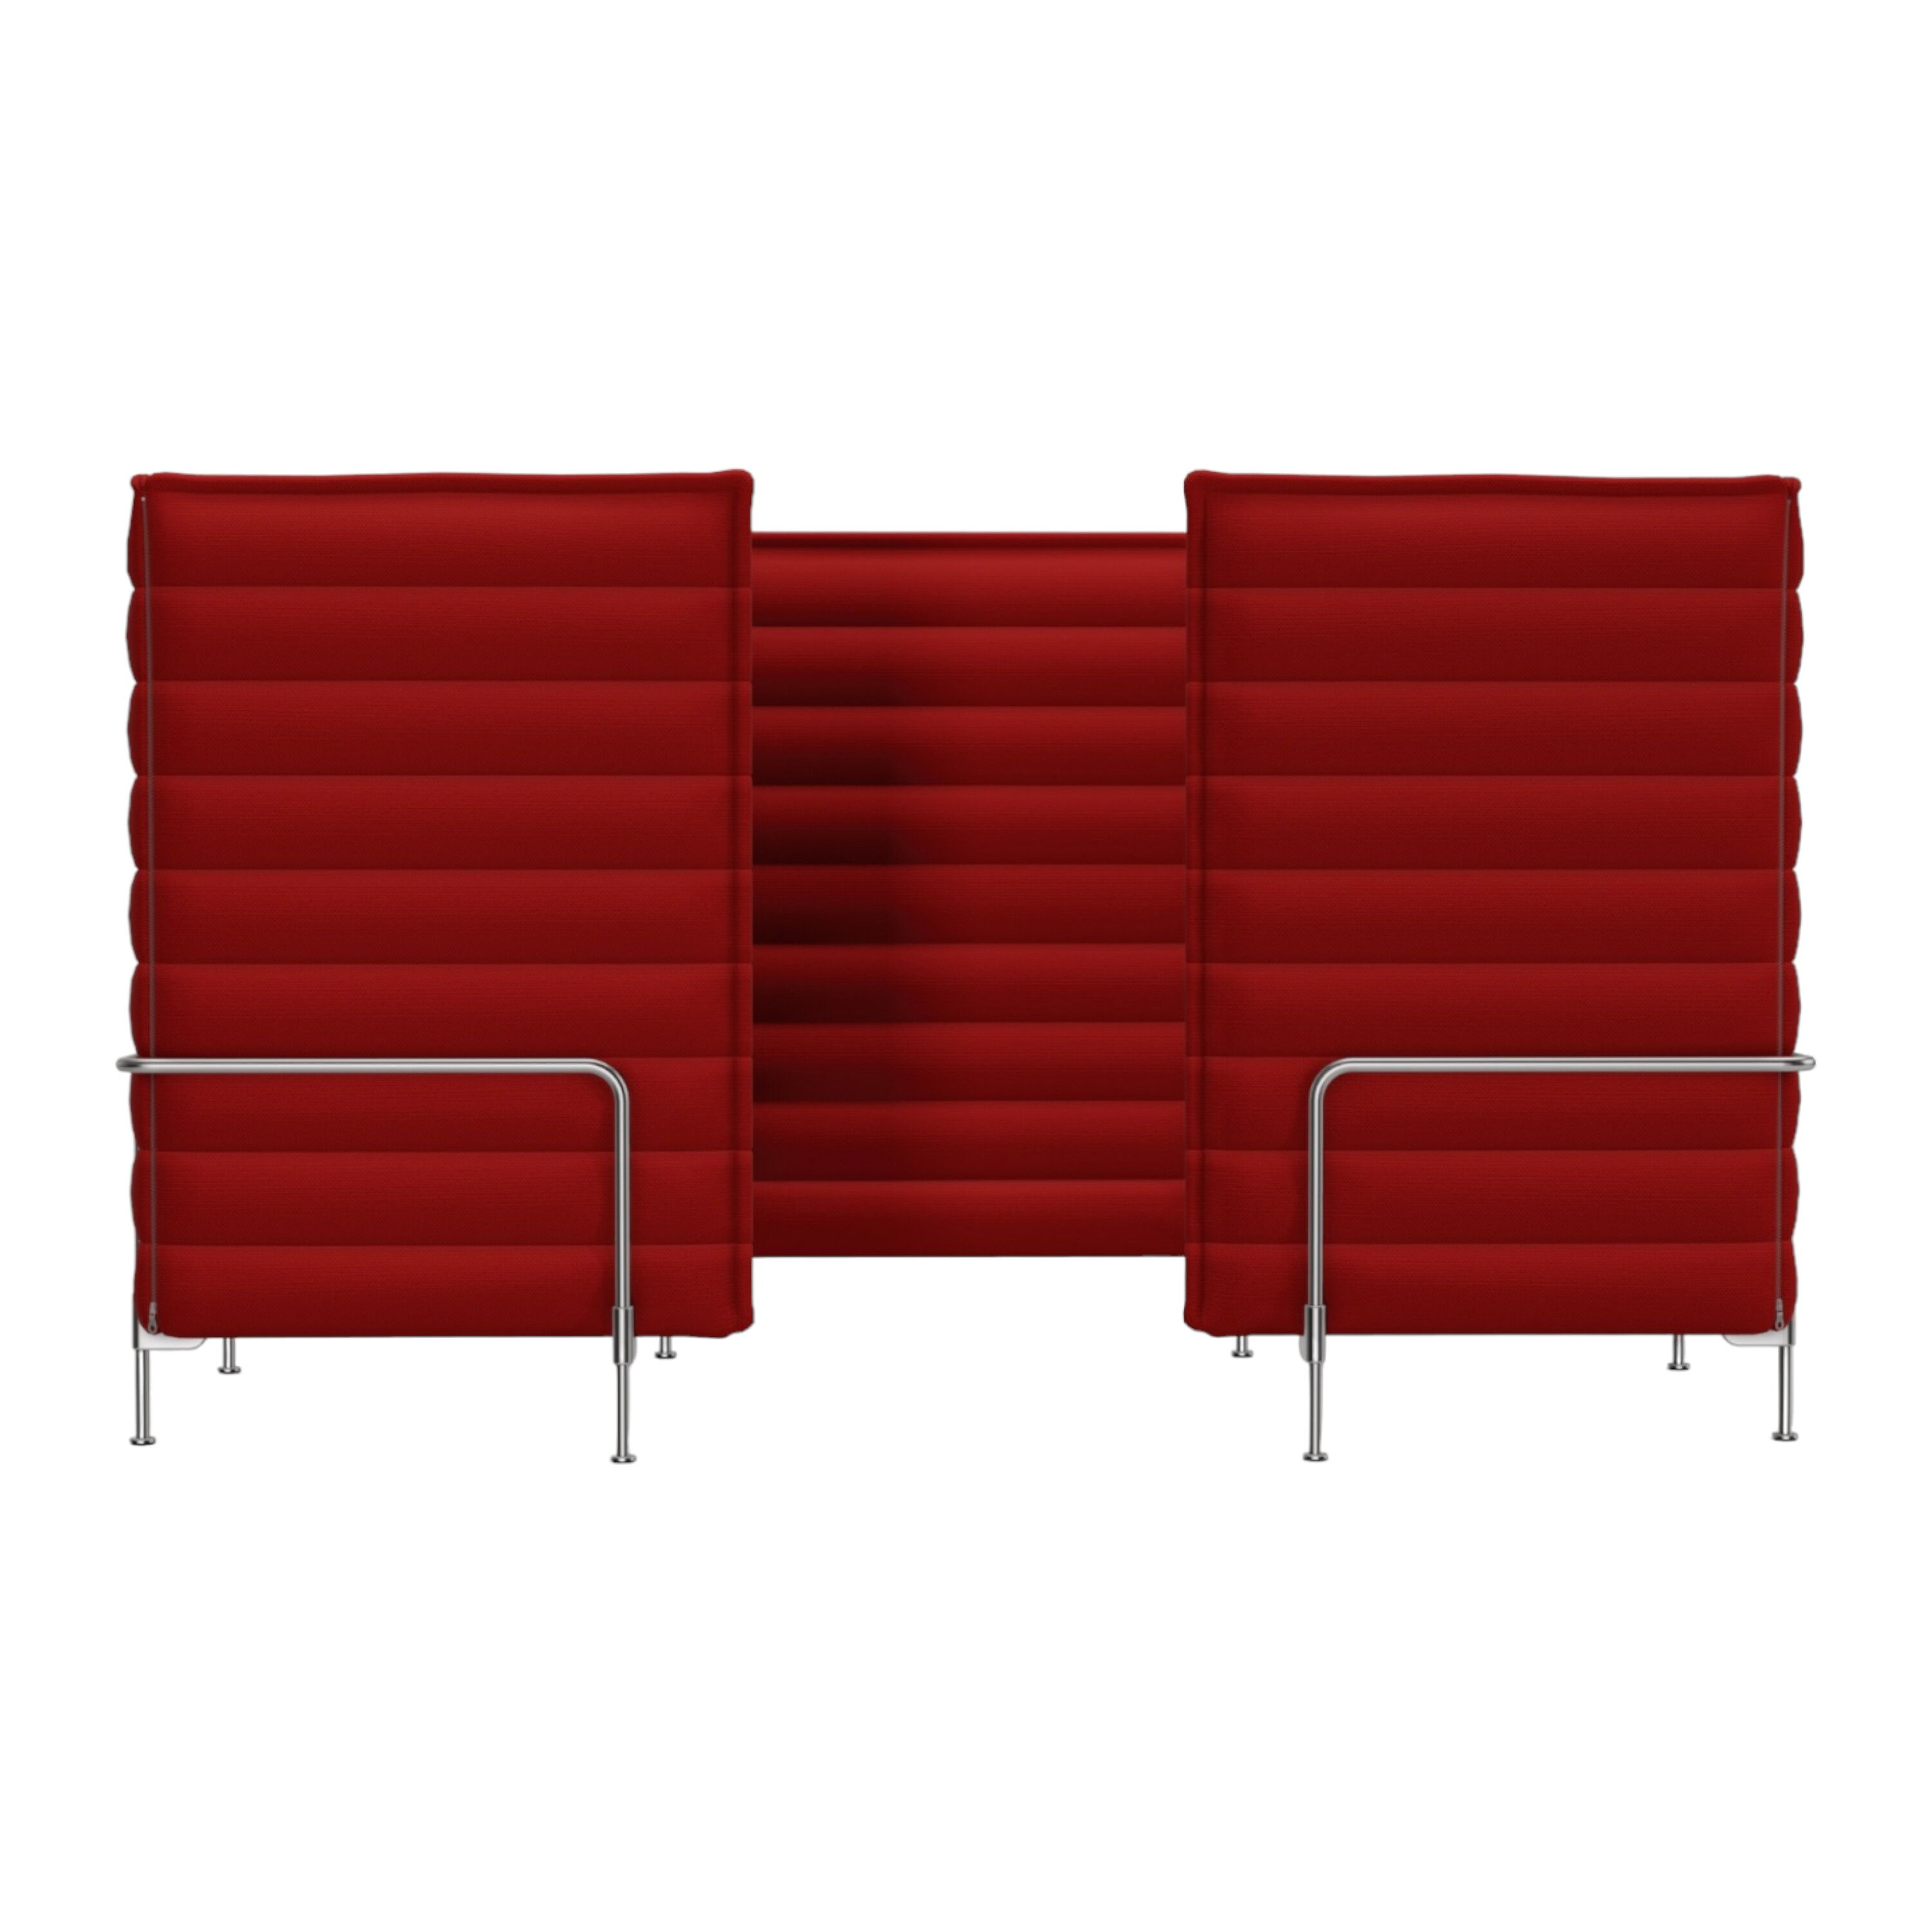 vitra-sofa-al2-cabin-love-seat-hb-stoff-laser-rot-hellrot-mf-0005779-001-5